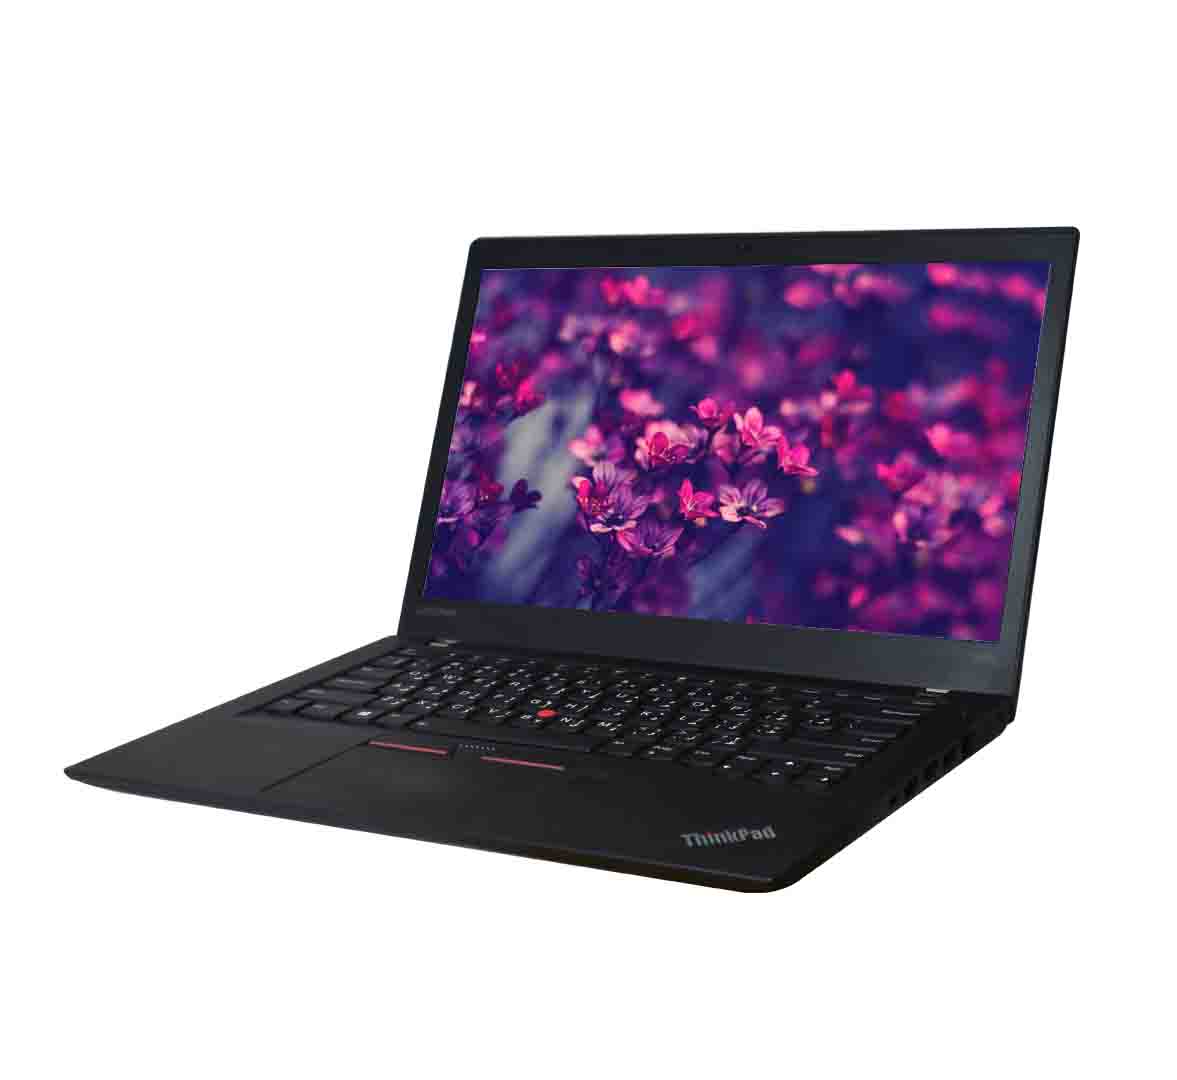 Lenovo ThinkPad T470s W10DG Business Laptop, Intel Core i7-6th Gen. CPU, 8GB RAM, 256GB SSD, 14 inch Touchscreen, Windows 10, Refurbished Laptop